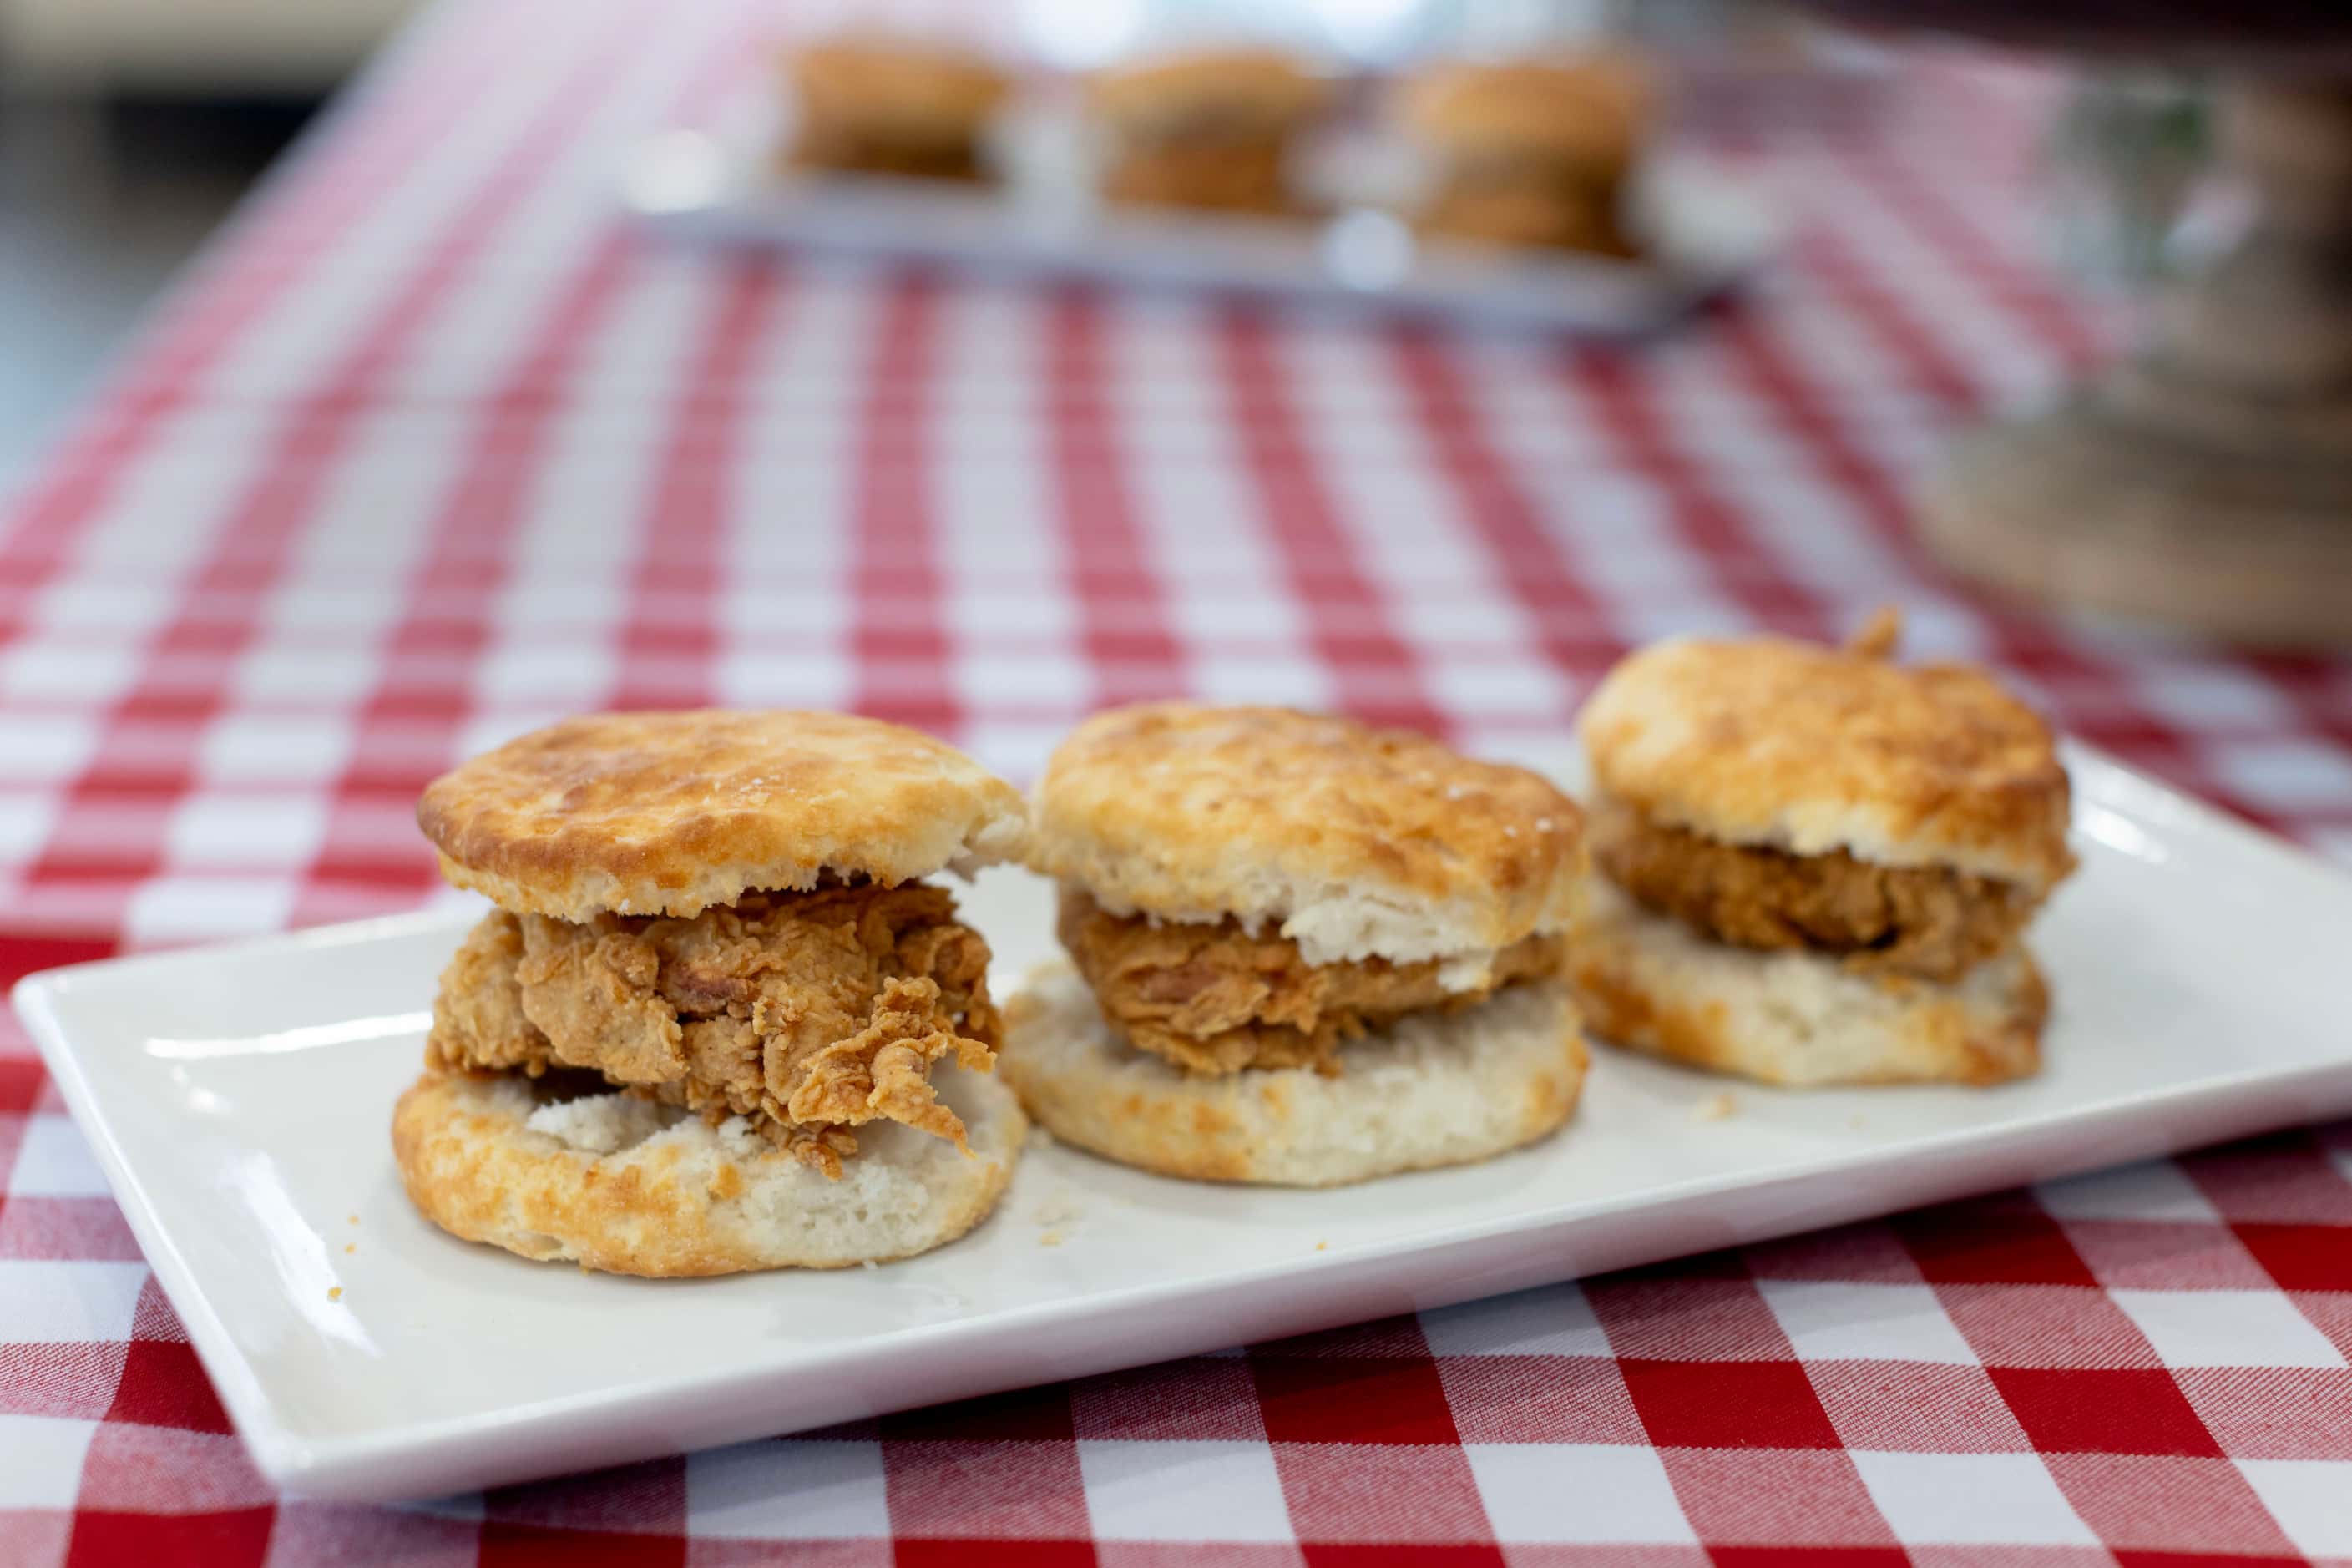 The Bojangles biscuit sandwich is the way to go, says North Carolina native Ari Sen....